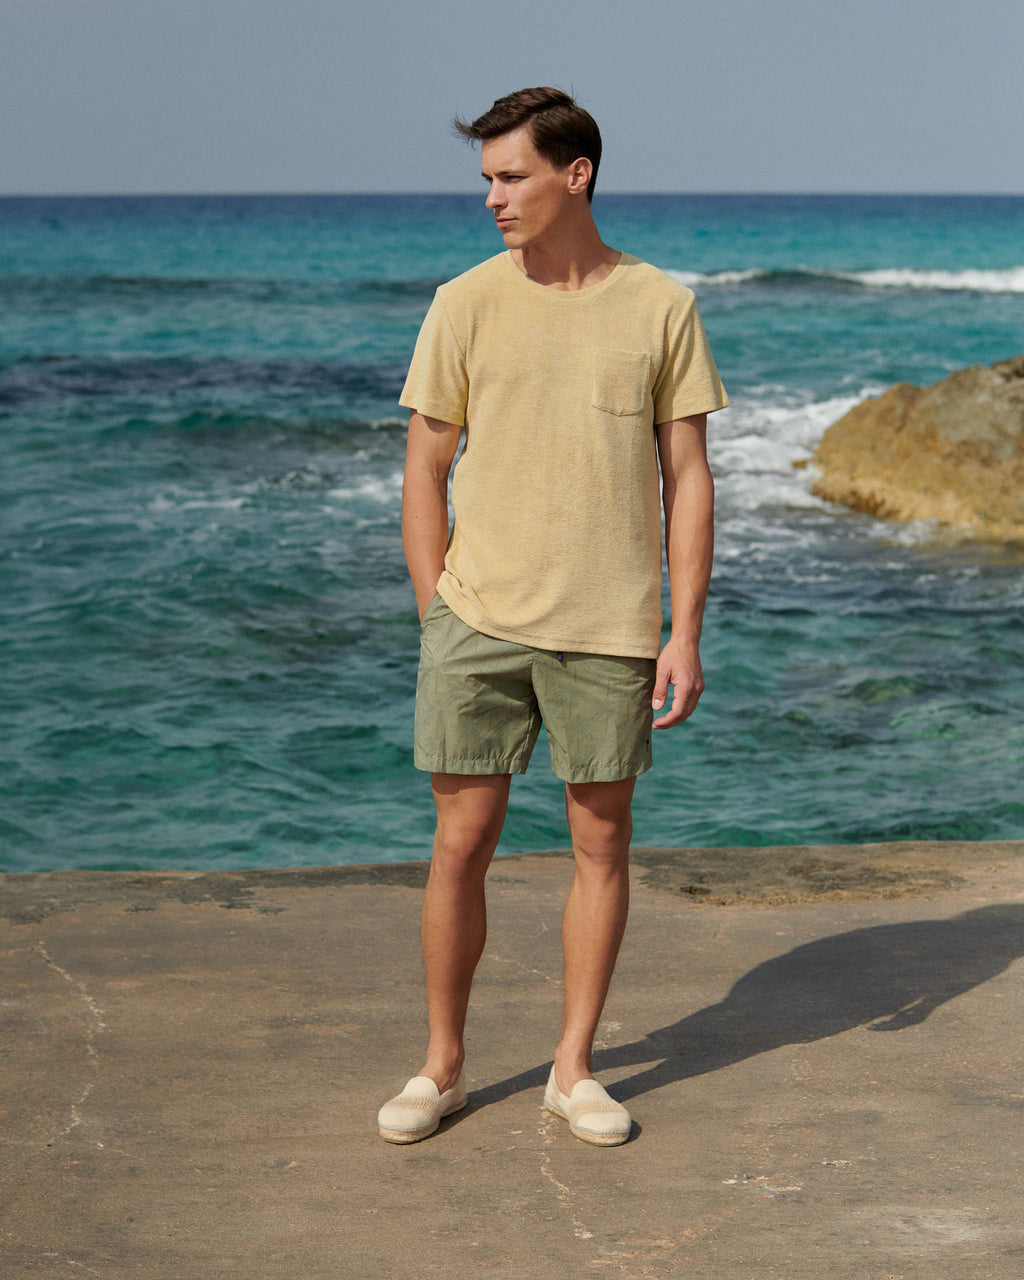 Organic Terry Cotton Emilio T-Shirt - Round-necked - Sand